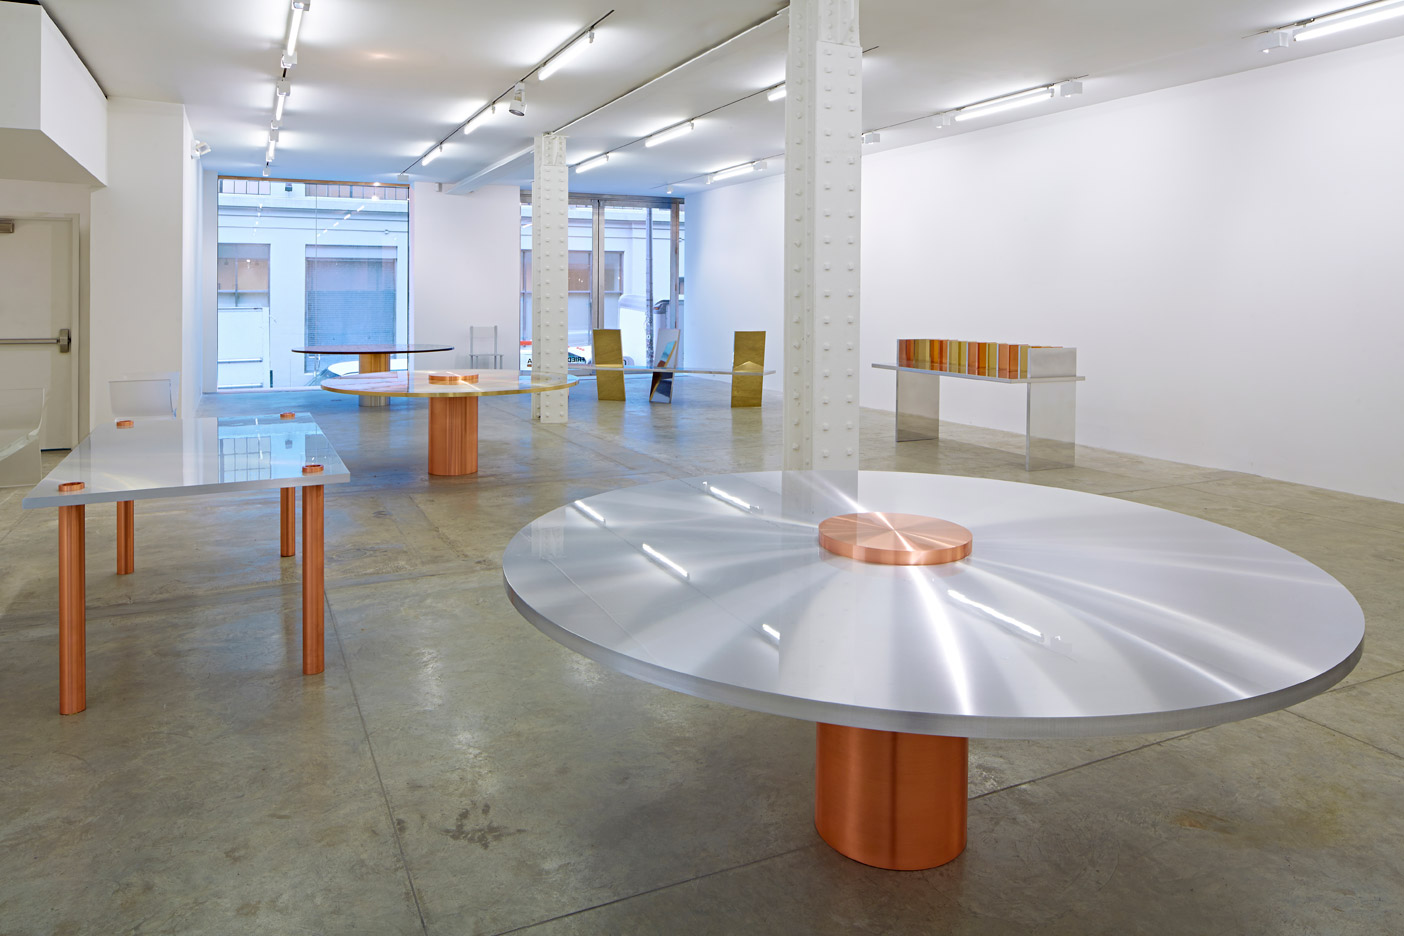 Paul Cocksedge’s Freeze Exhibition Of Metal Furniture Opens At Friedman Benda In New York